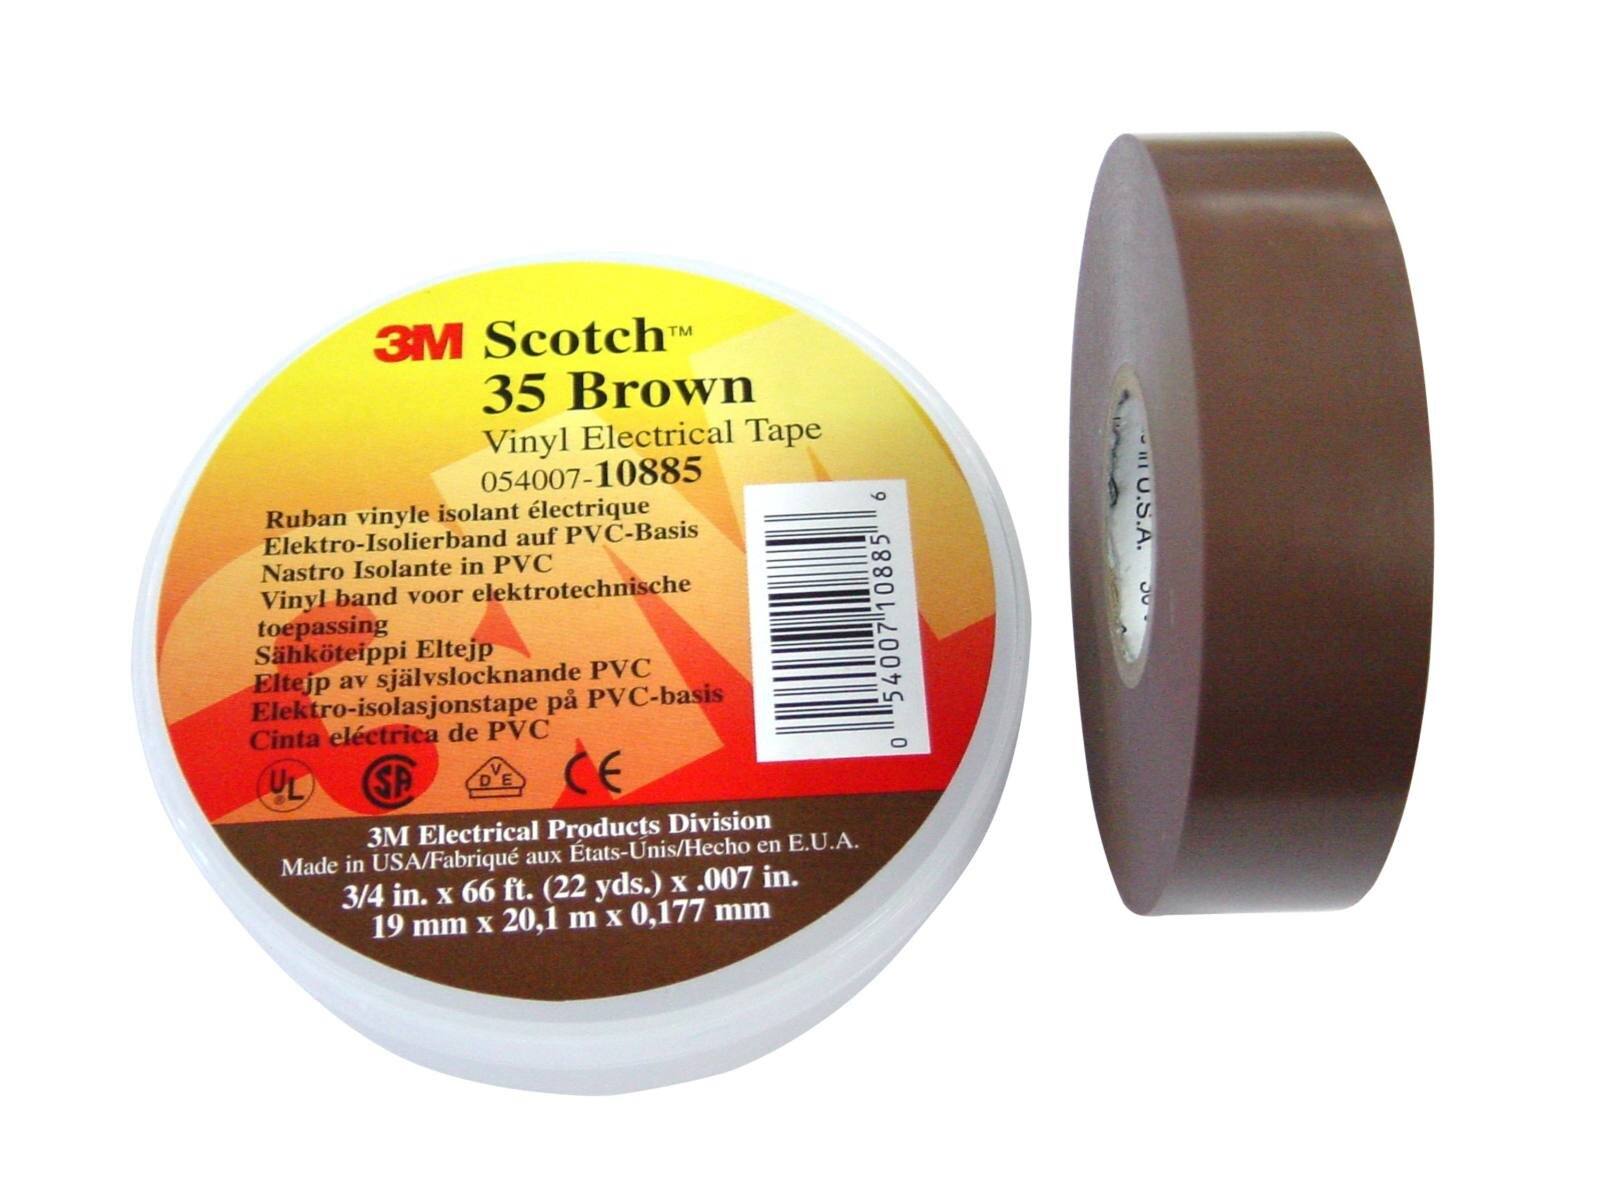 3M Scotch 35 Vinyl Electrical Insulating Tape, Brown, 19 mm x 20 m, 0.18 mm